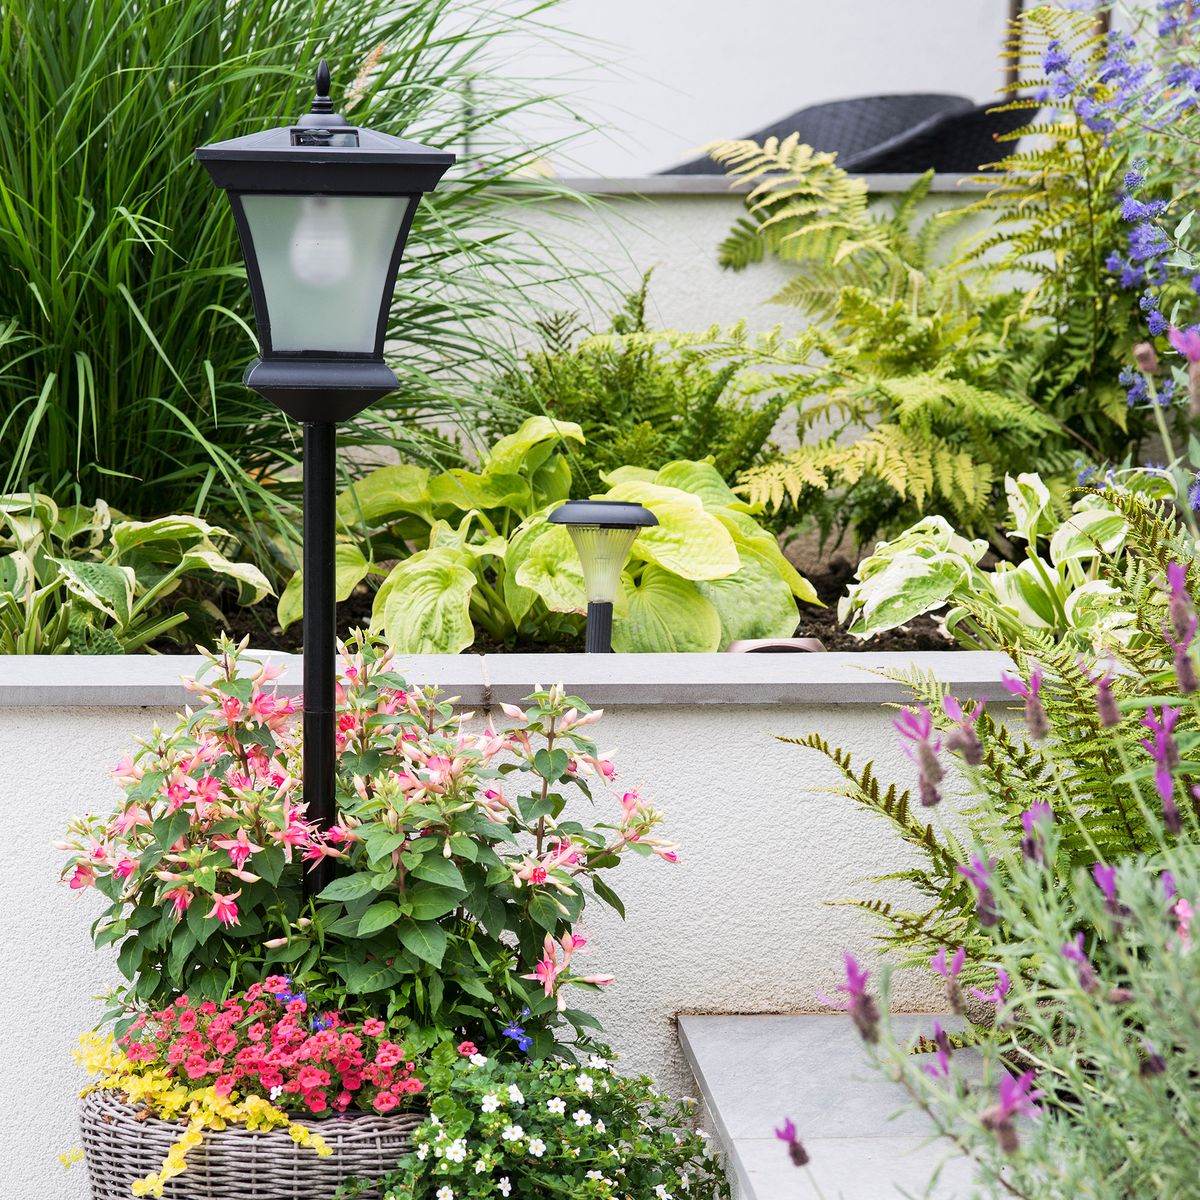 10 deck lighting ideas to brighten your outdoor space